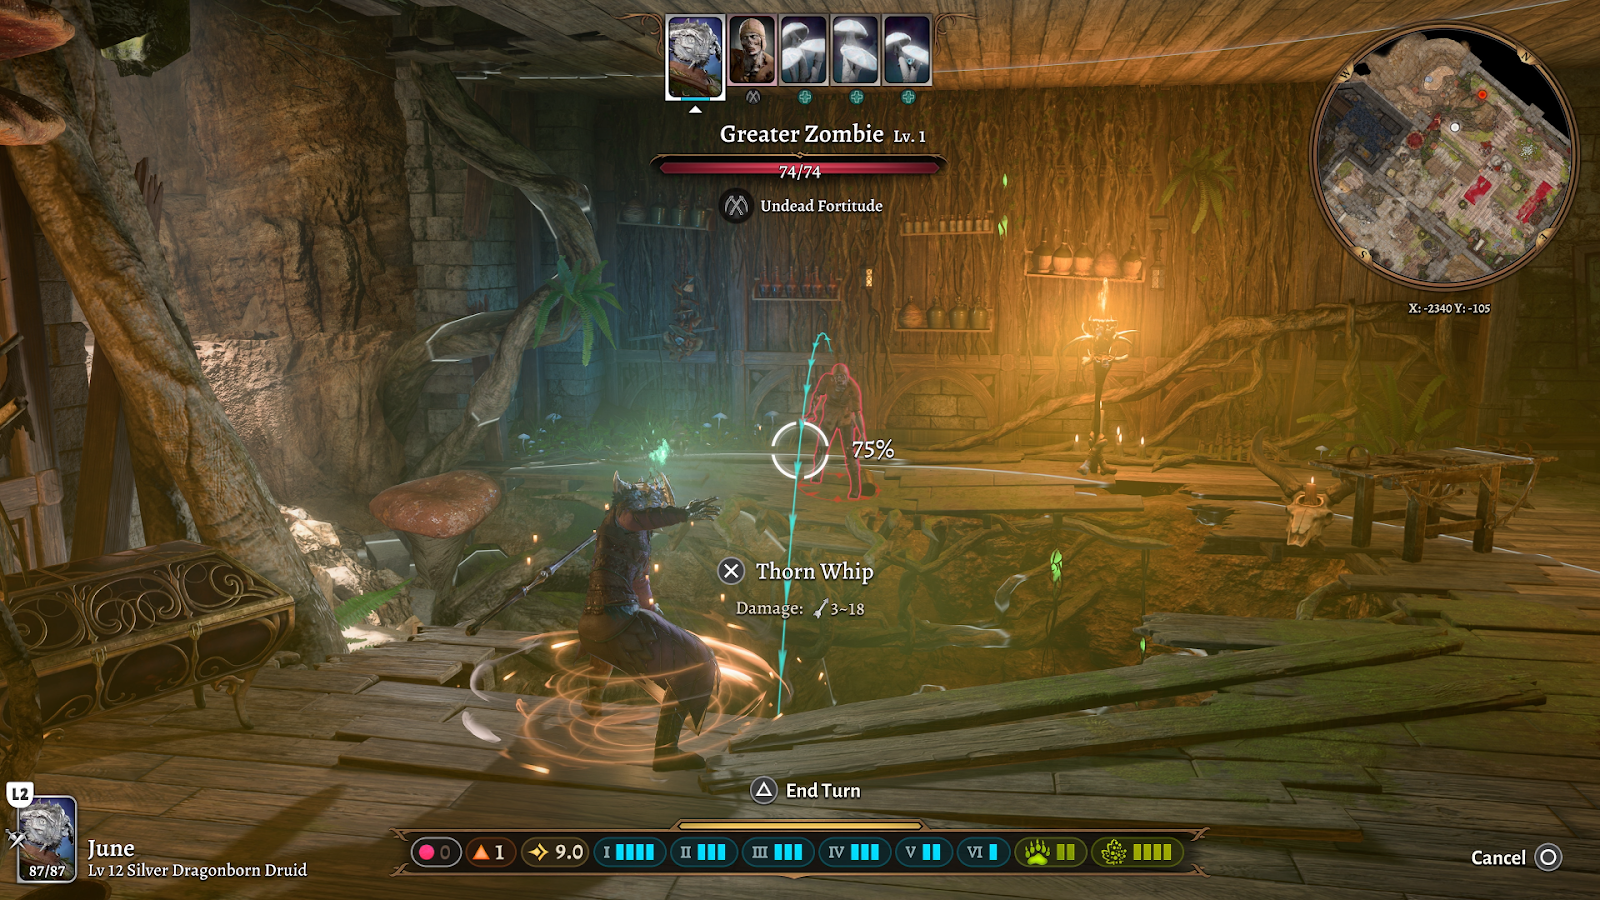 Baldur's Gate 3 dev teases updates on the RPG's Xbox release date